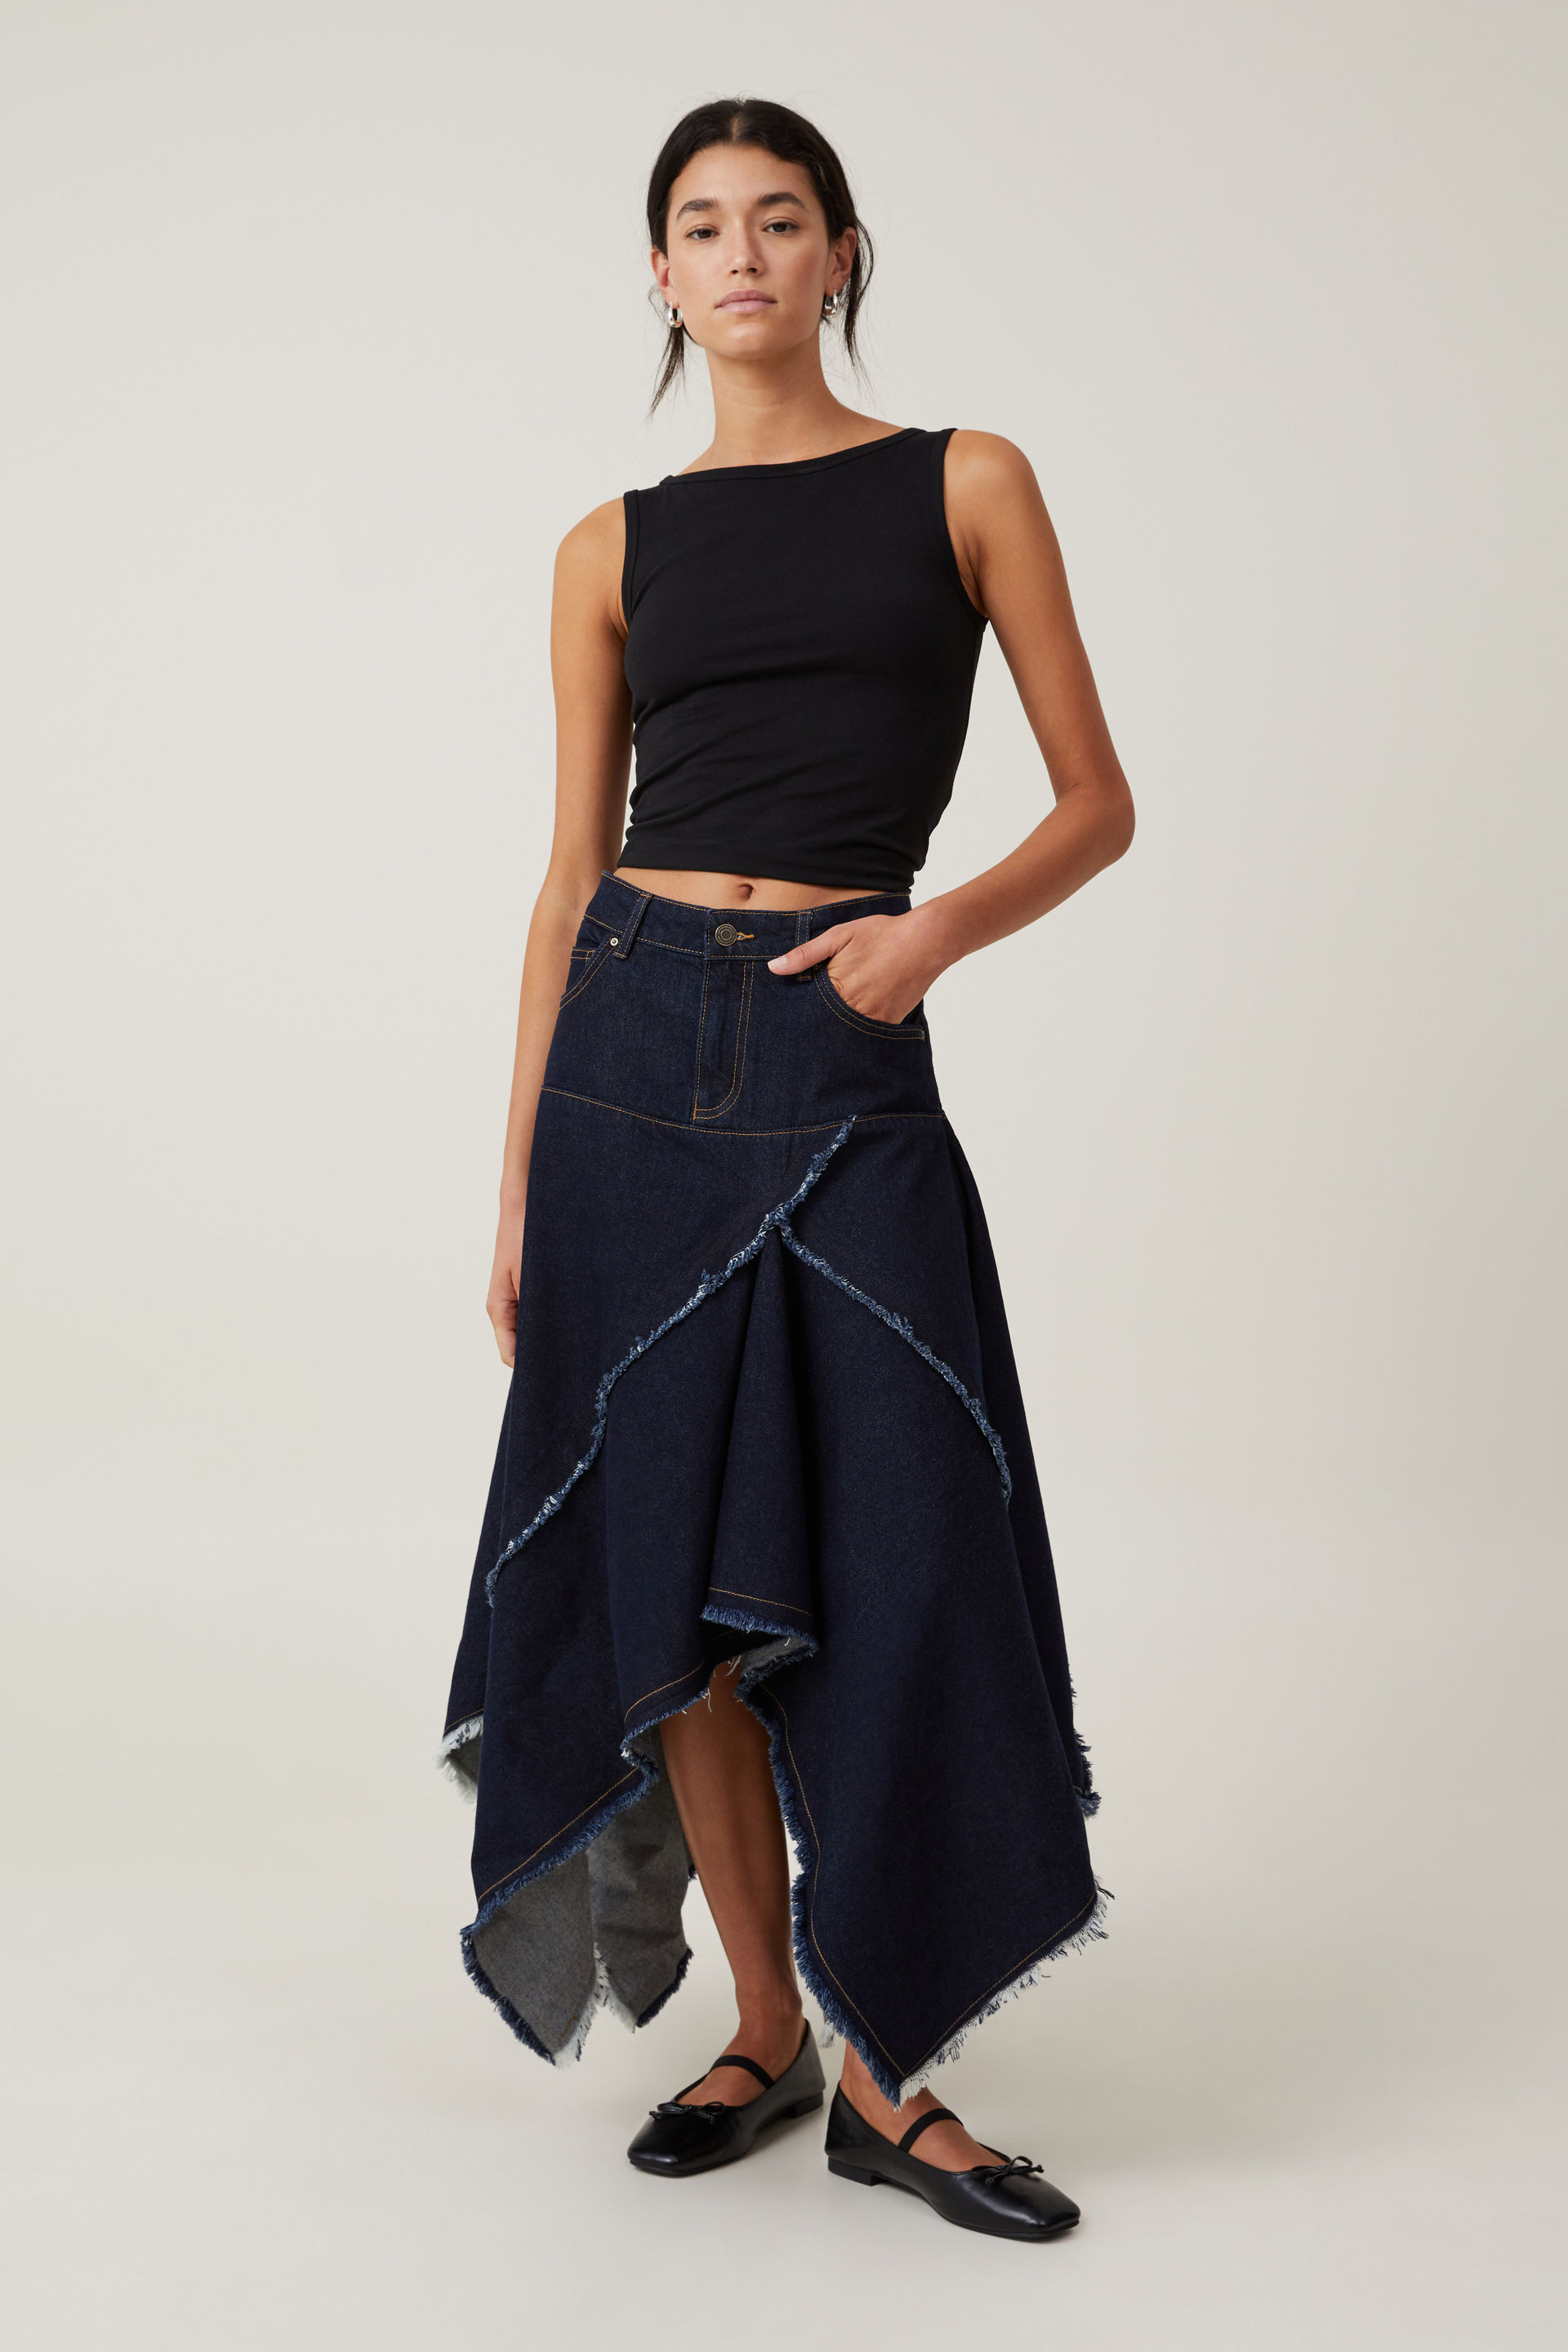 Cotton On Women - Harper Denim Midi Skirt - Indigo